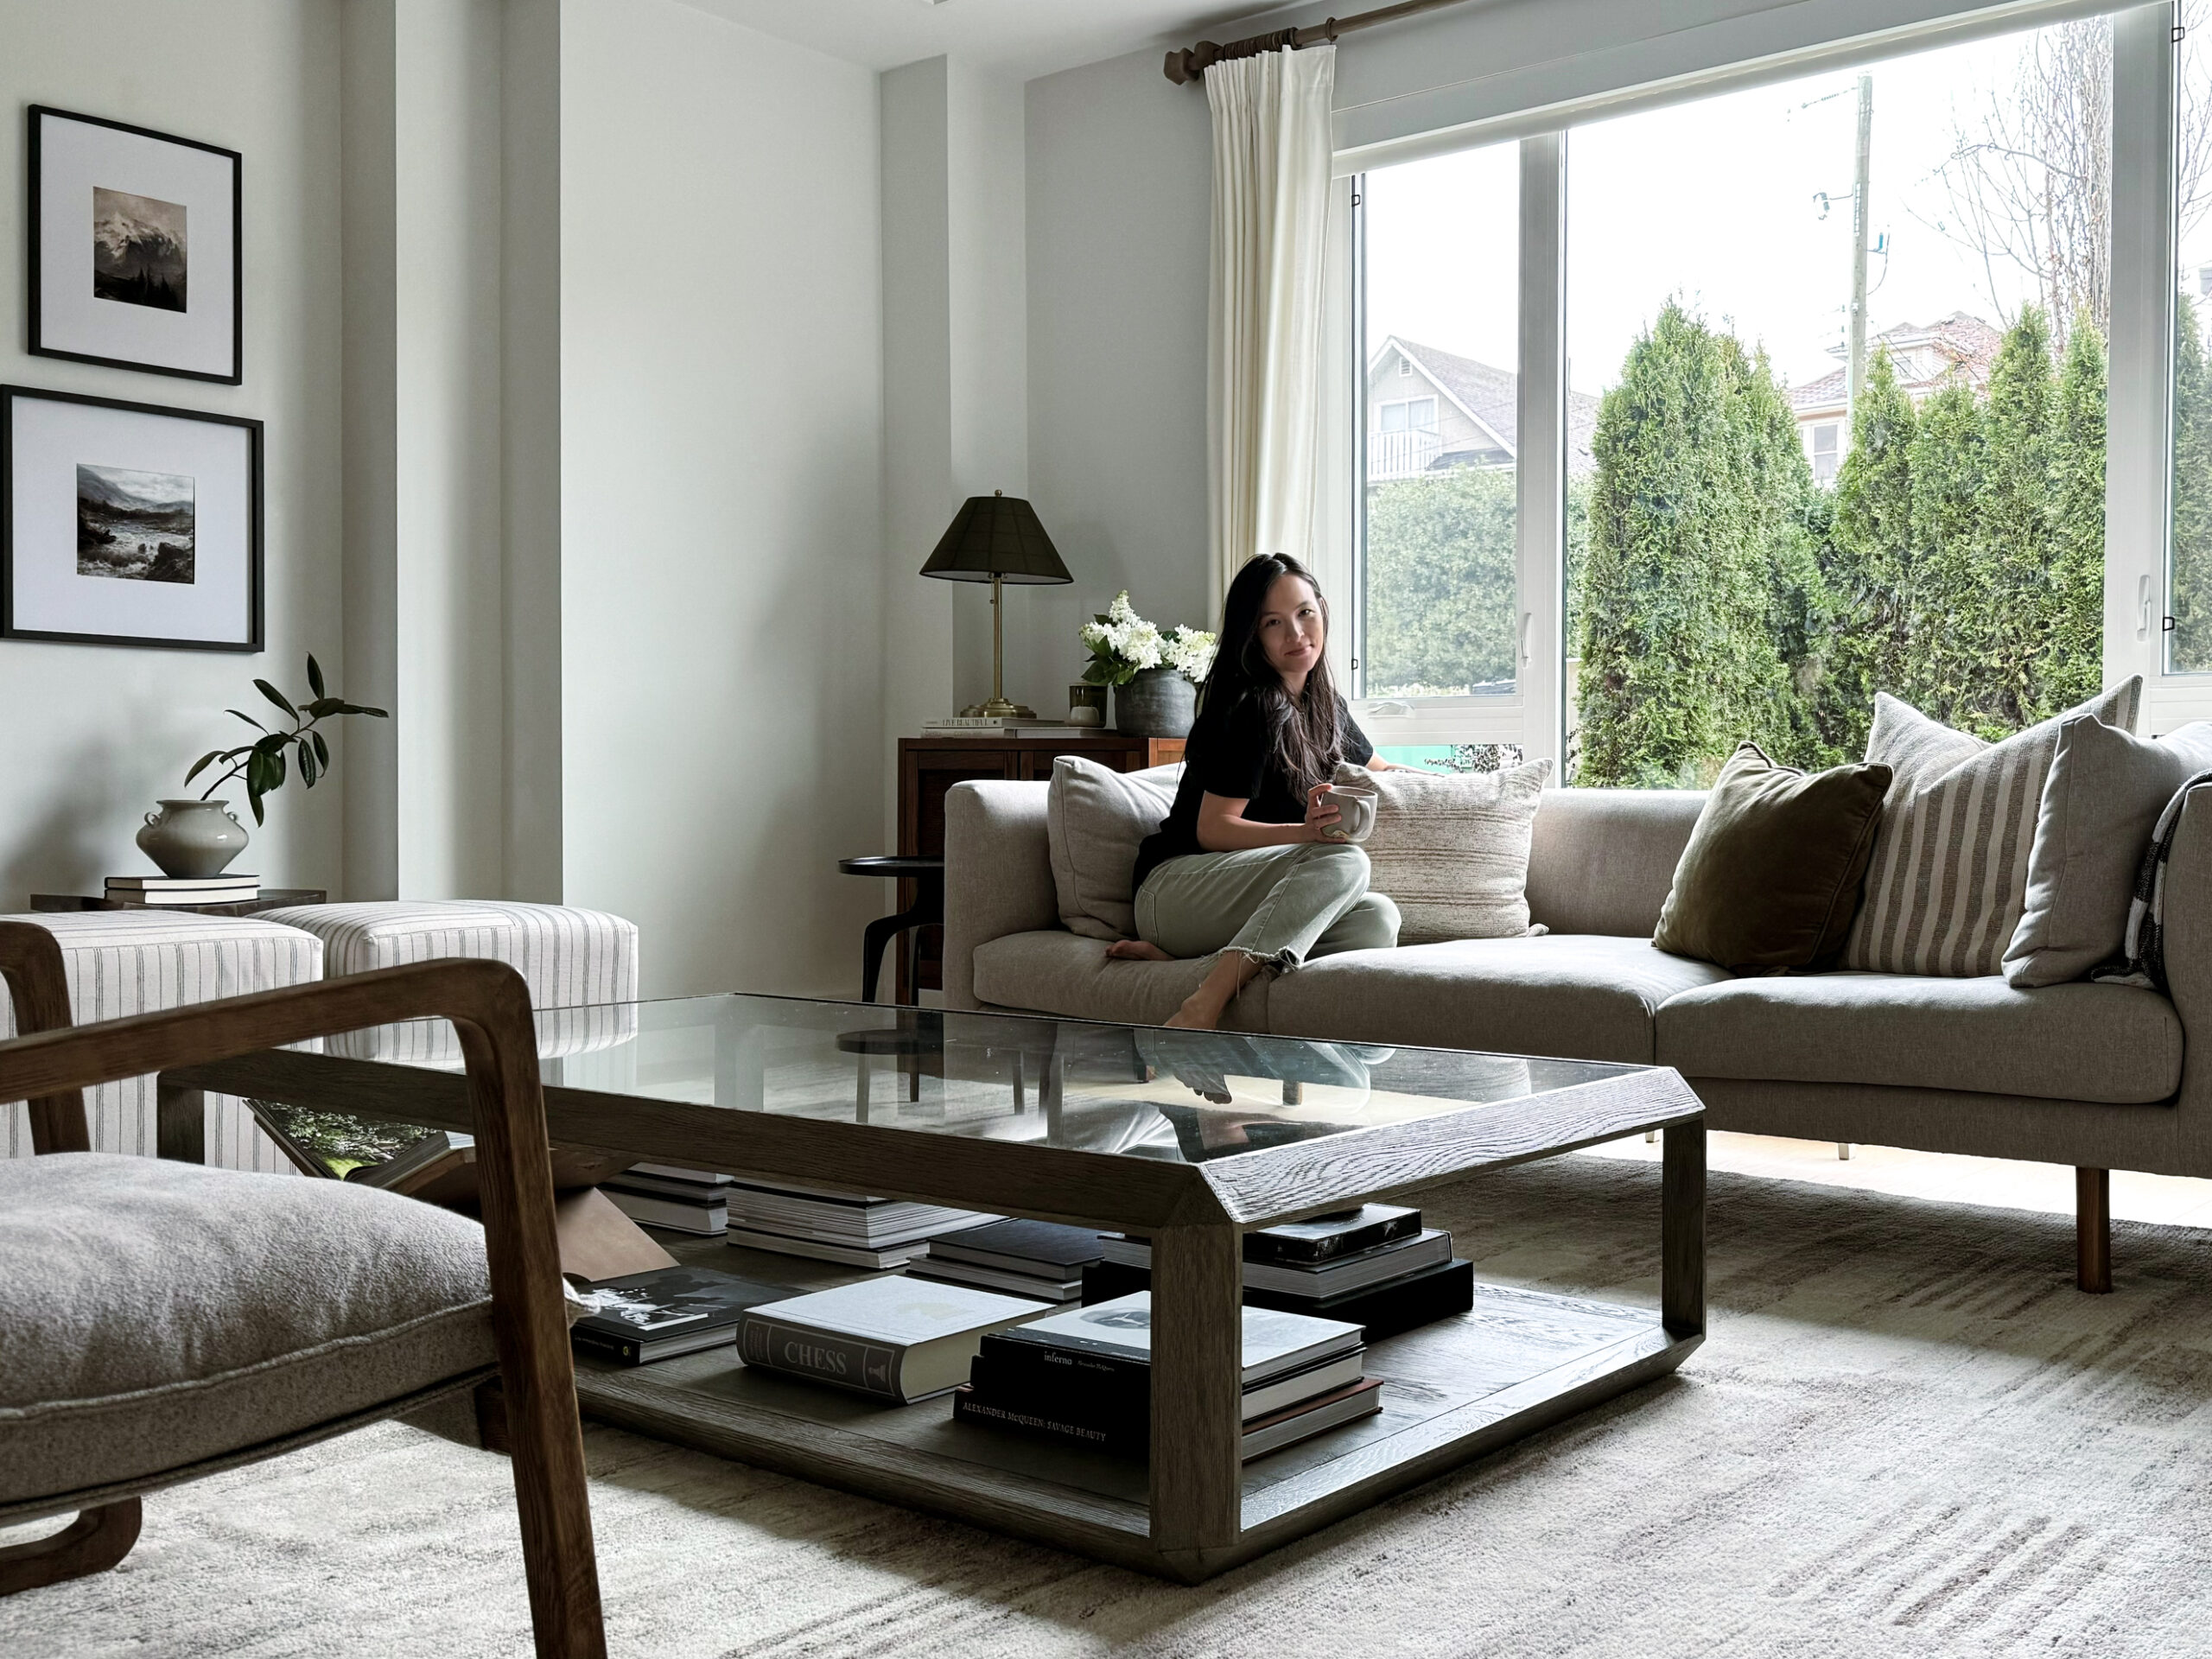 Decor refresh woman sitting on sofa with beautiful home decor around